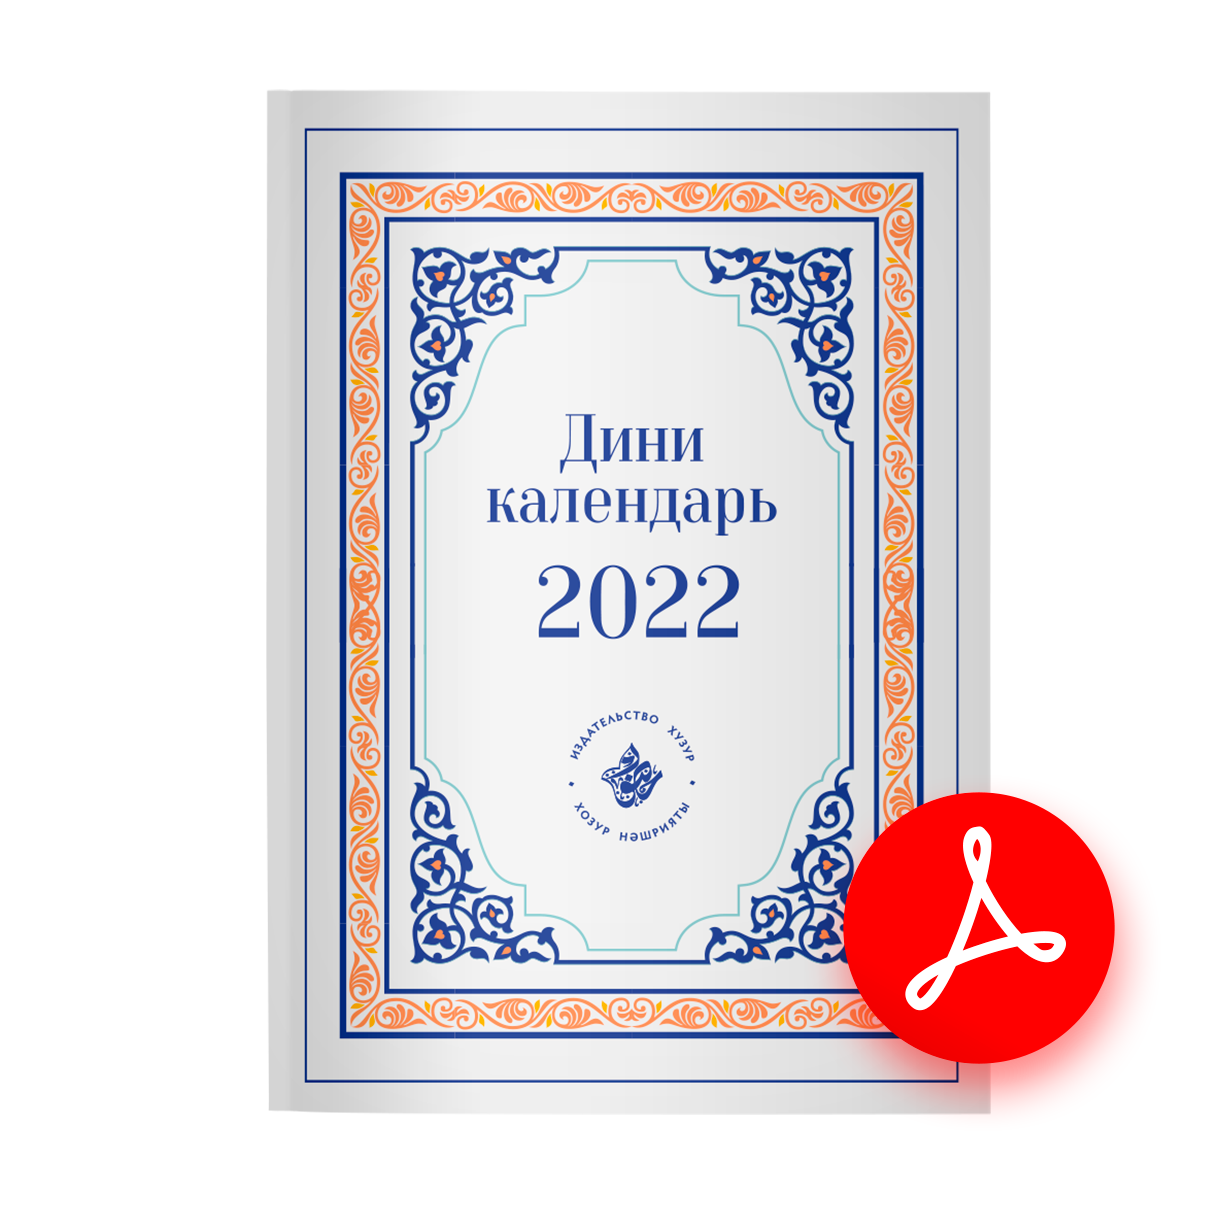 Дини календарь 2022 (электронная книга)